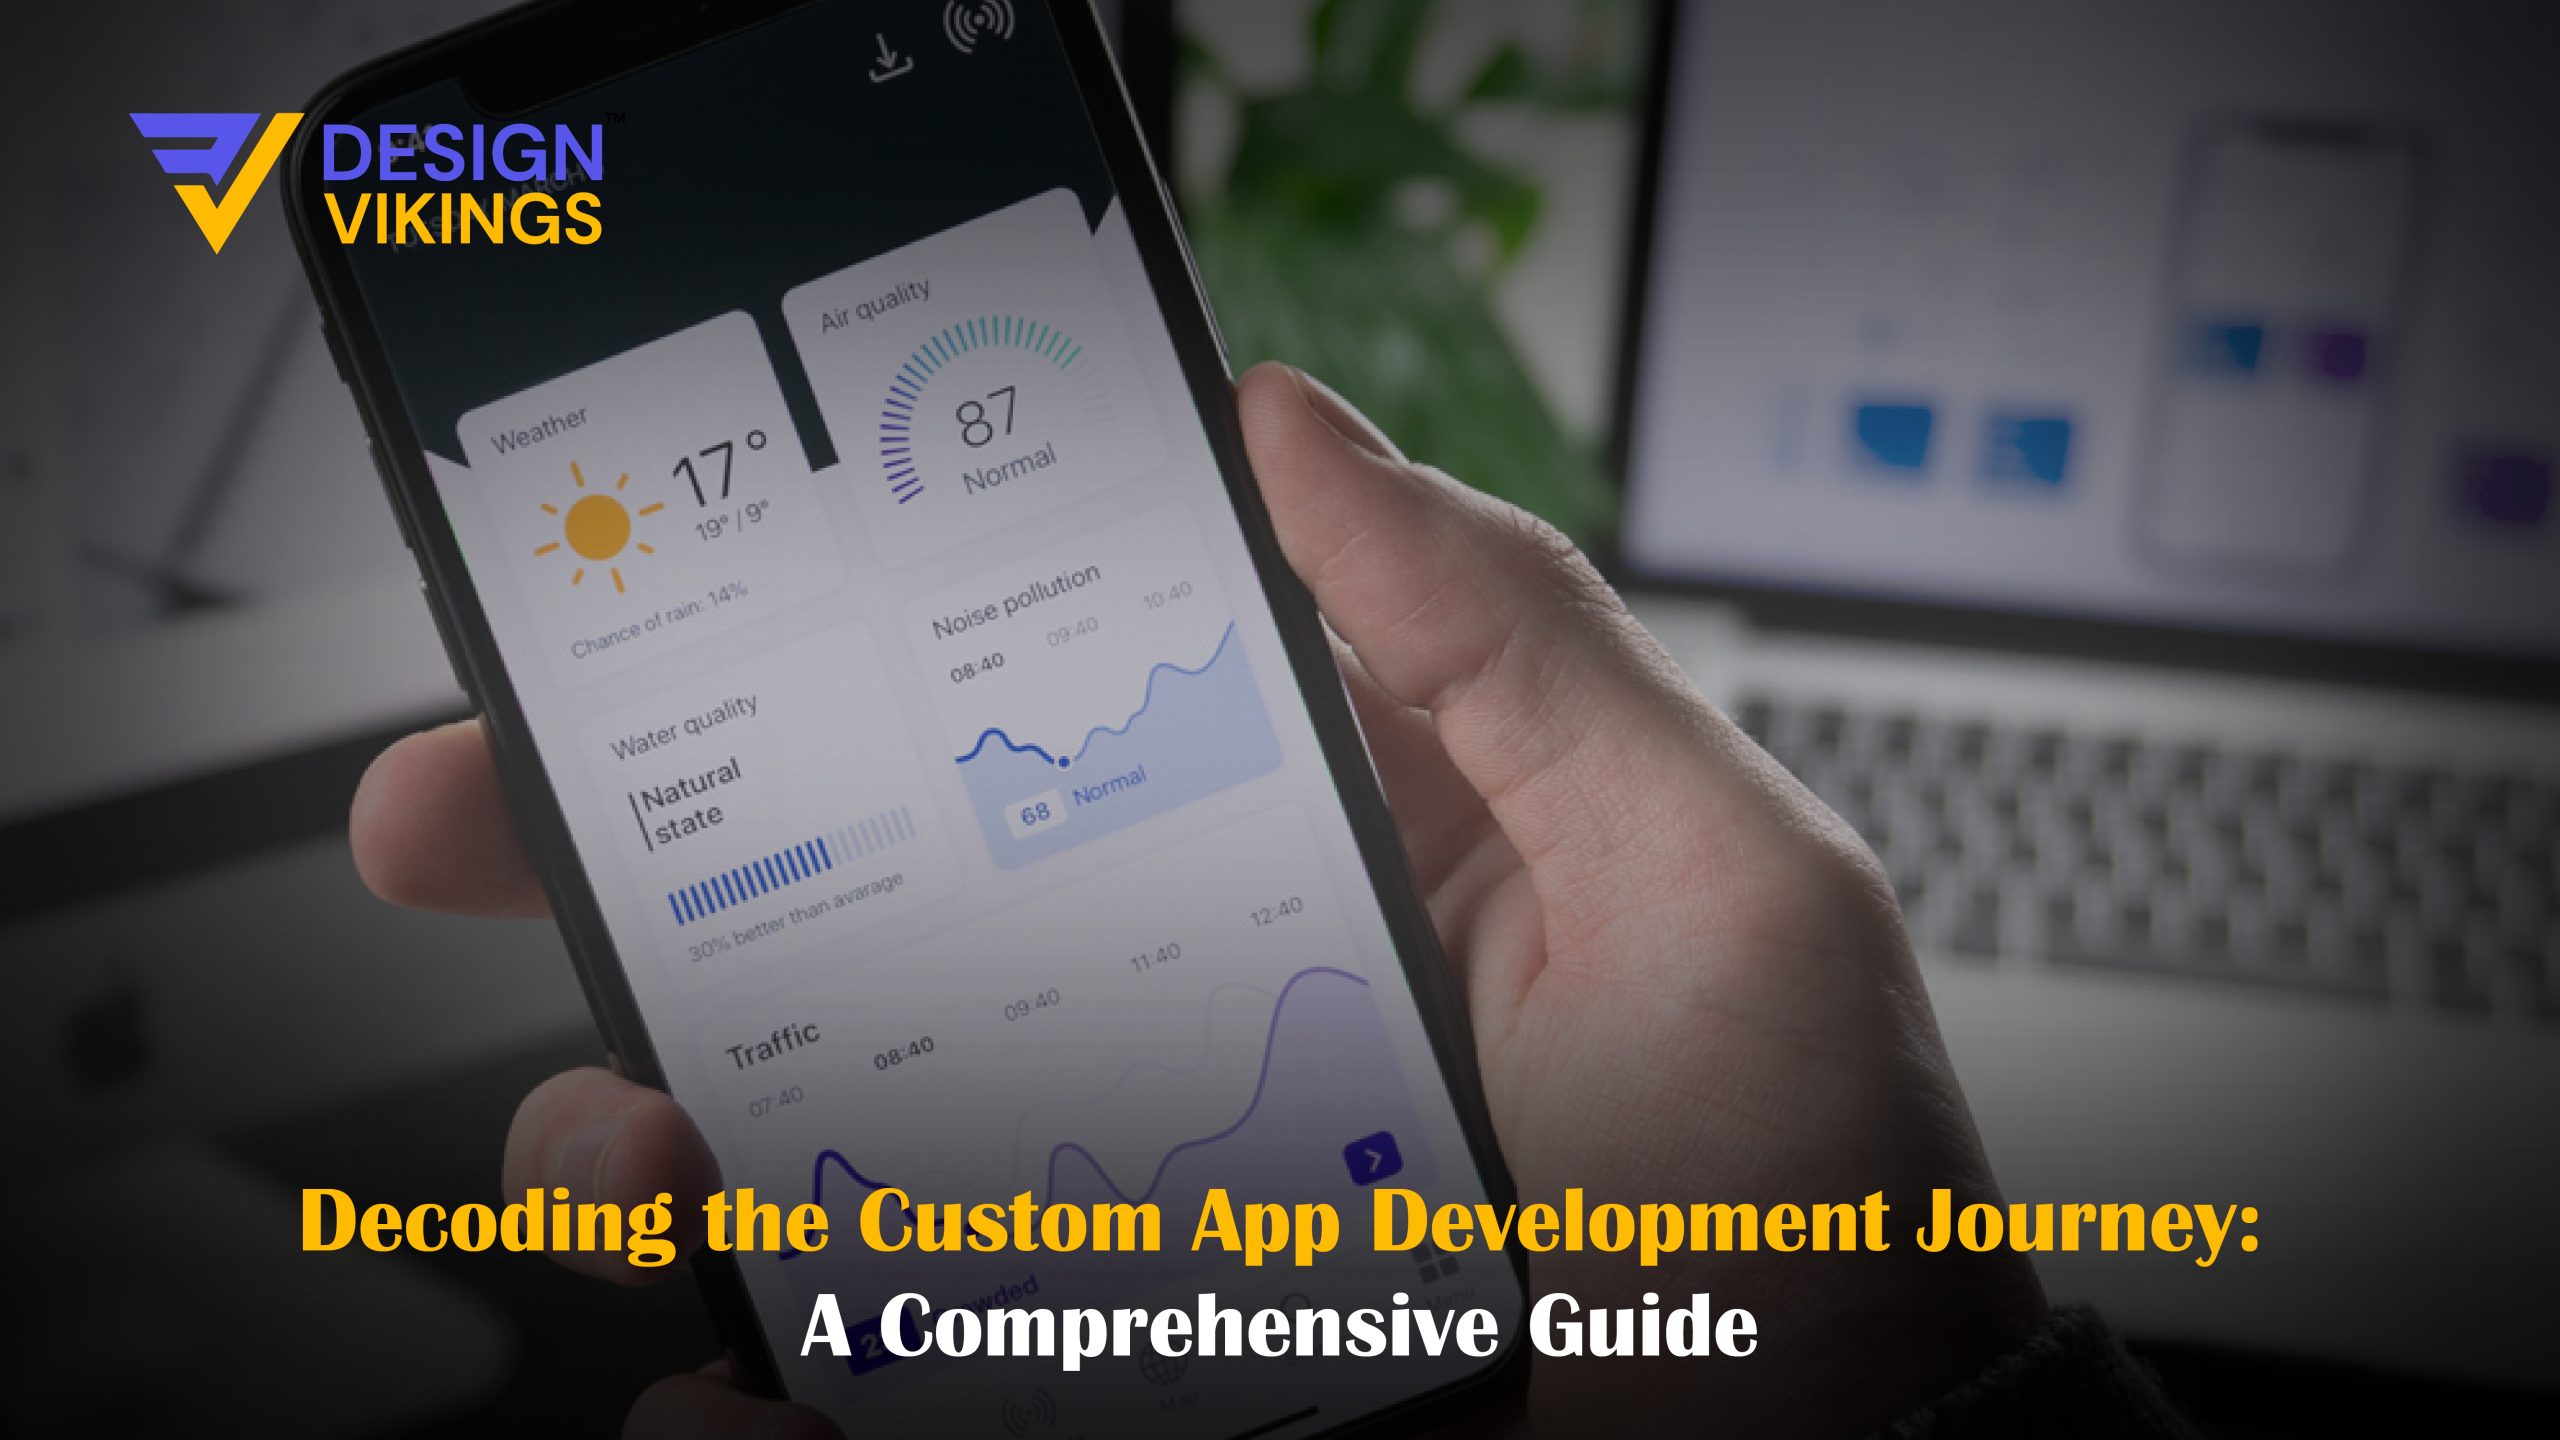 Comprehensive guide to custom app development journey